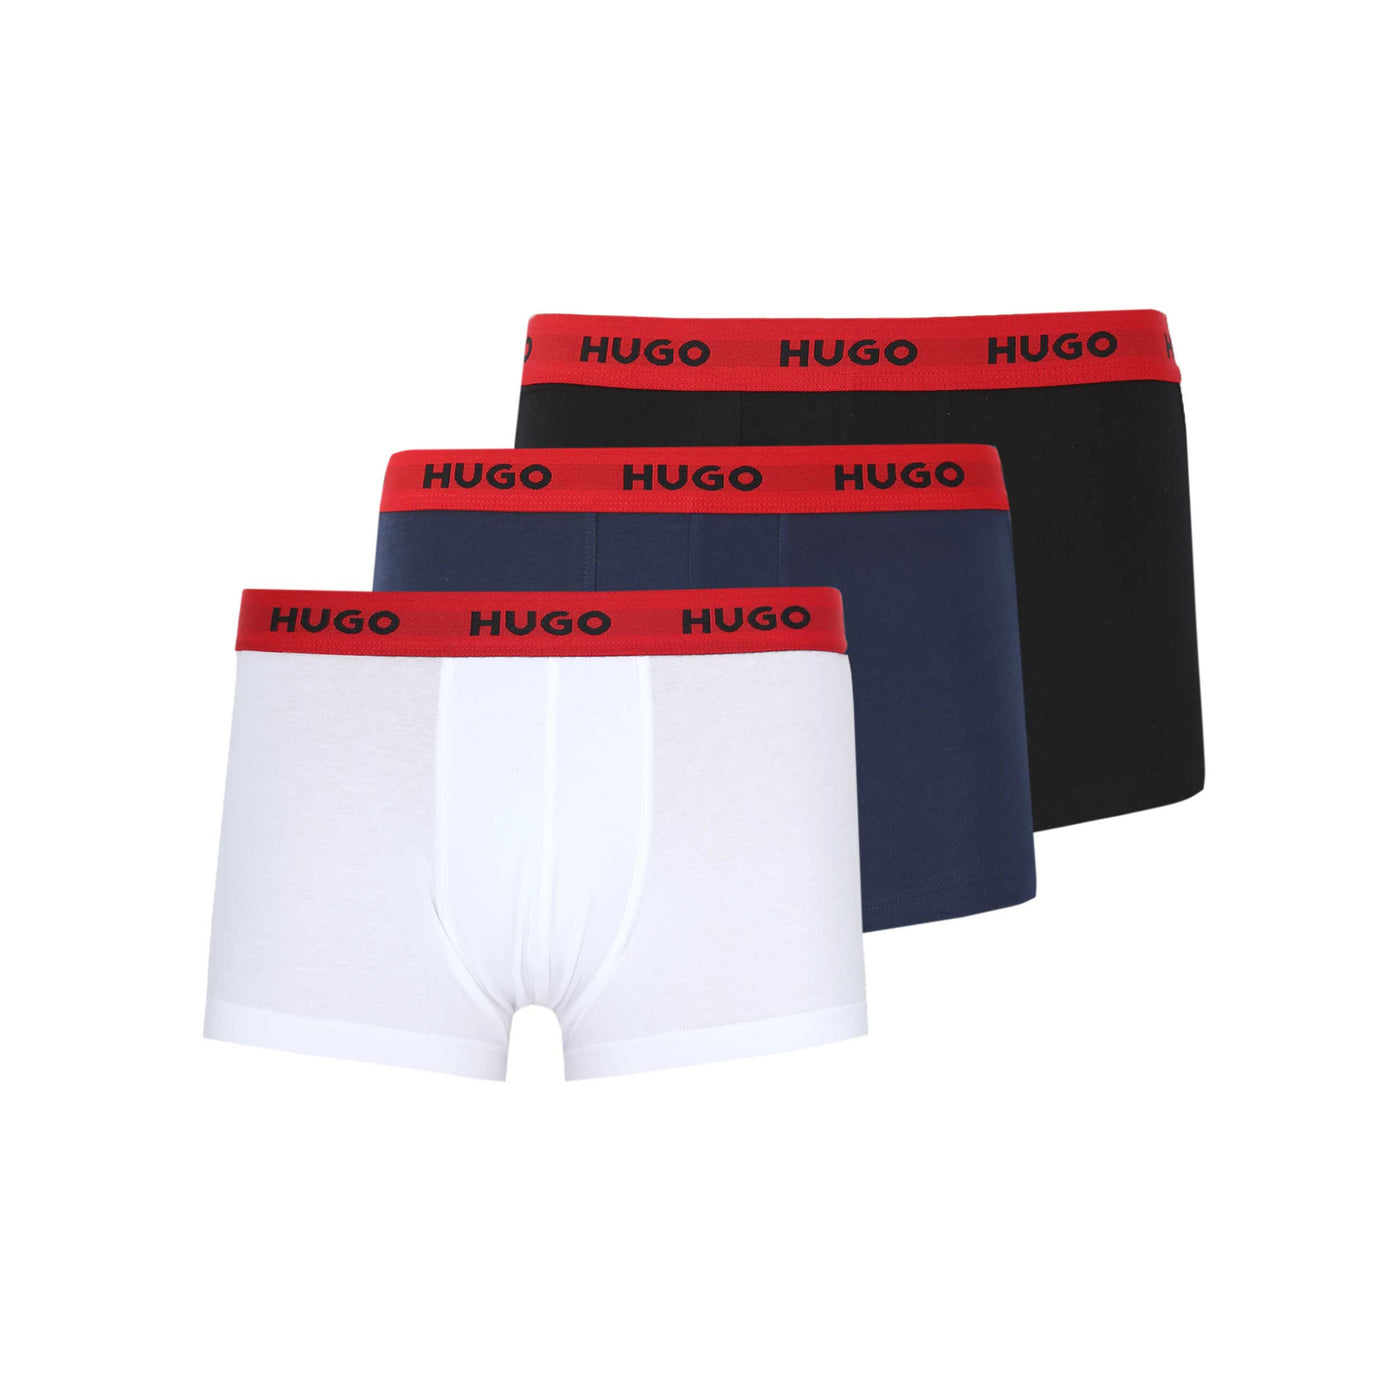 HUGO Trunk Triplet Pack Underwear in Black, White & Navy